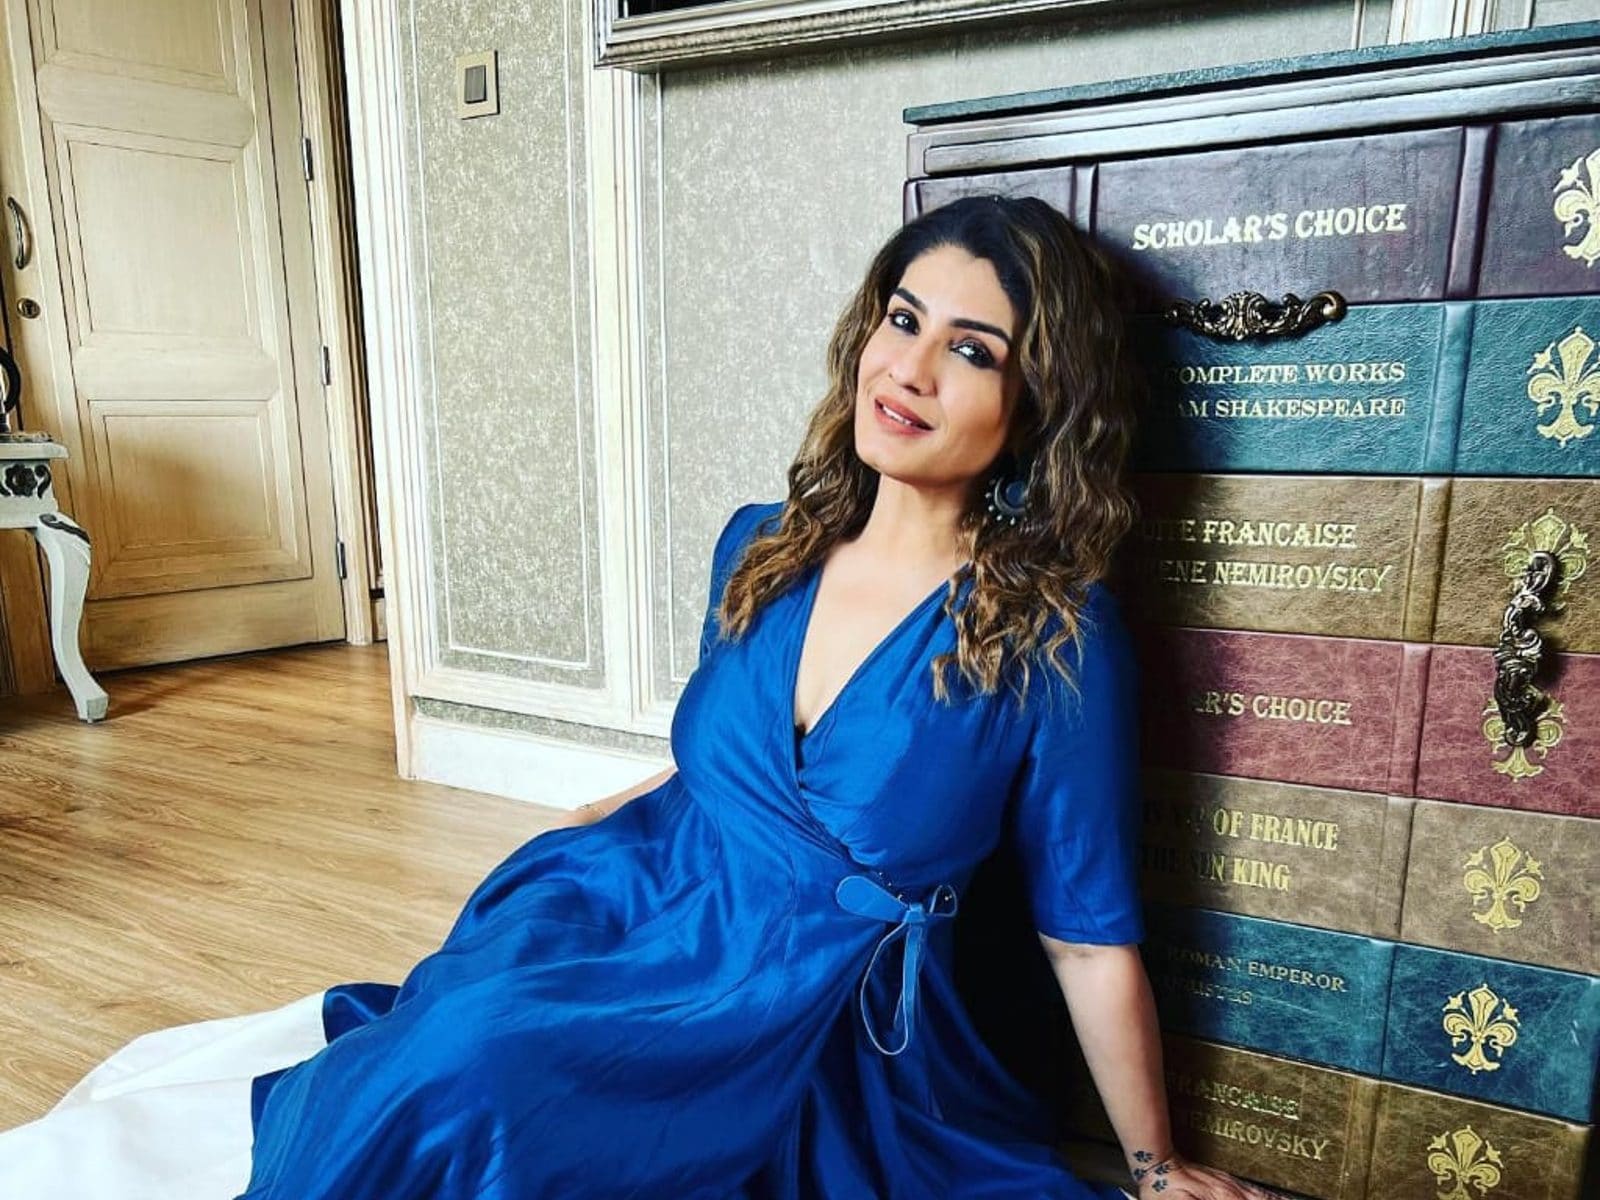 Raveena Tandon Chut Ka Photo - With Her Gorgeous Dress, Raveena Tandon Is Blazing Blues on Instagram. -  News18